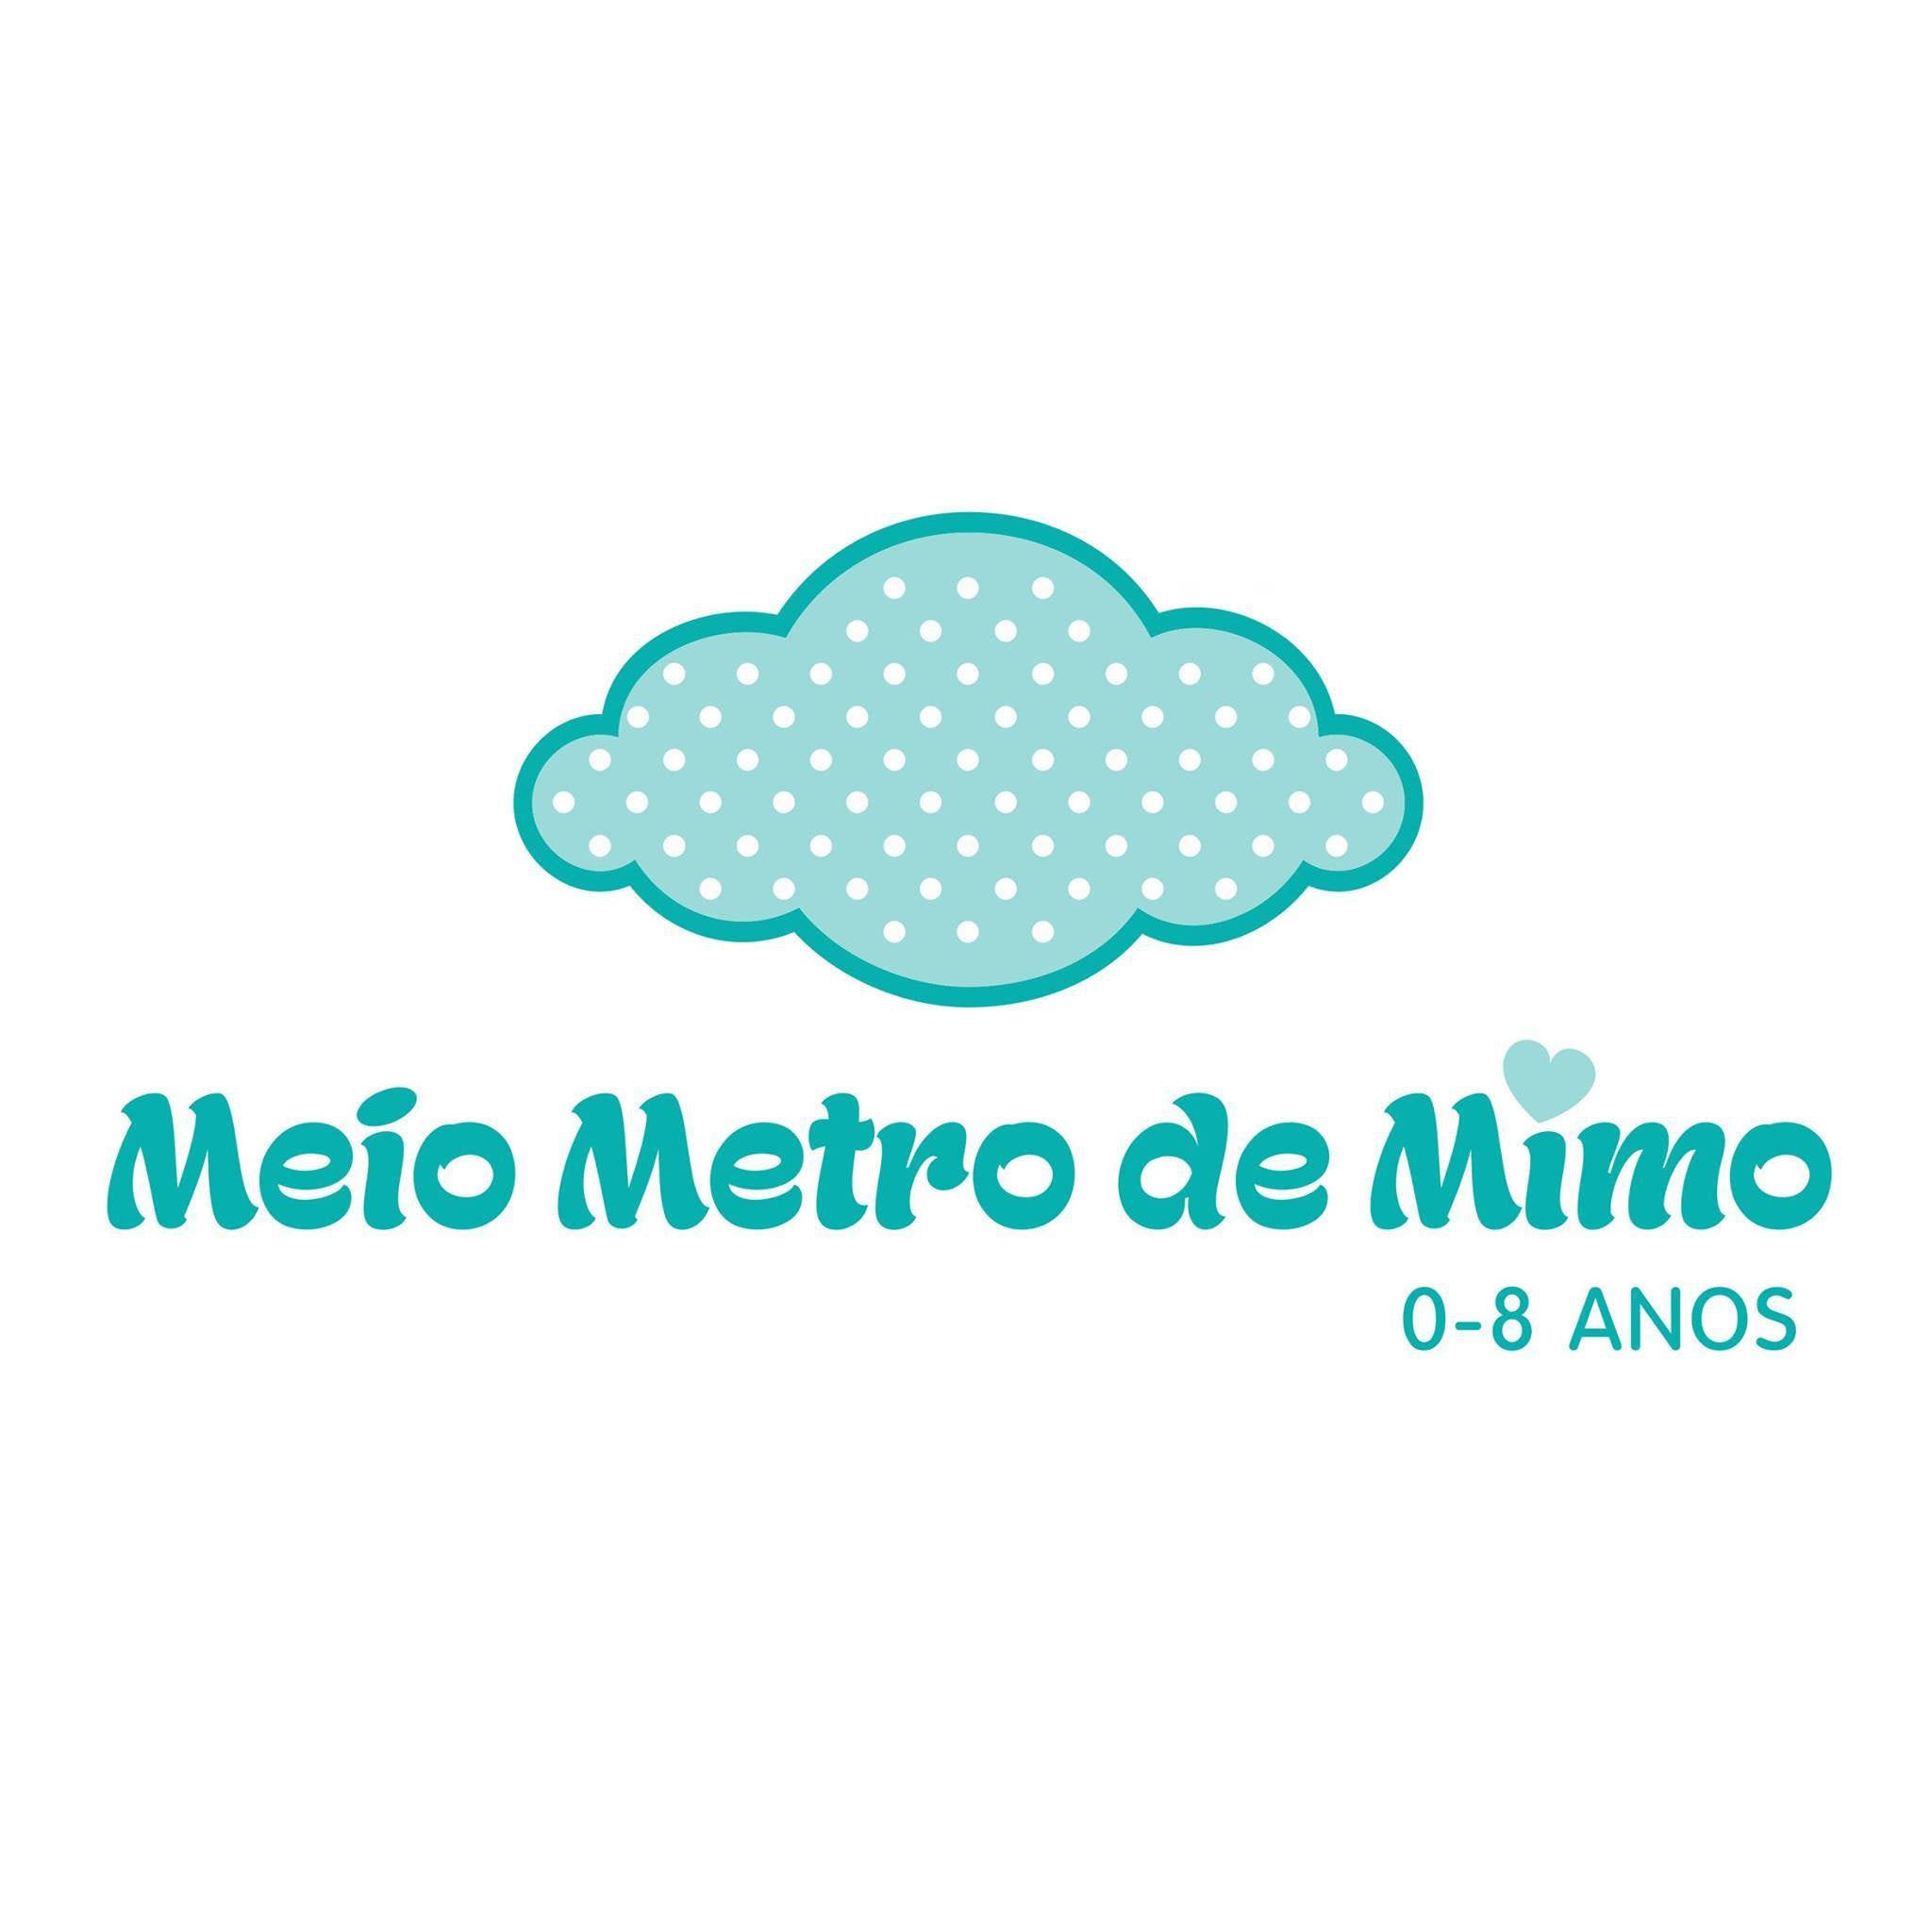 Meio Metro de Mimo